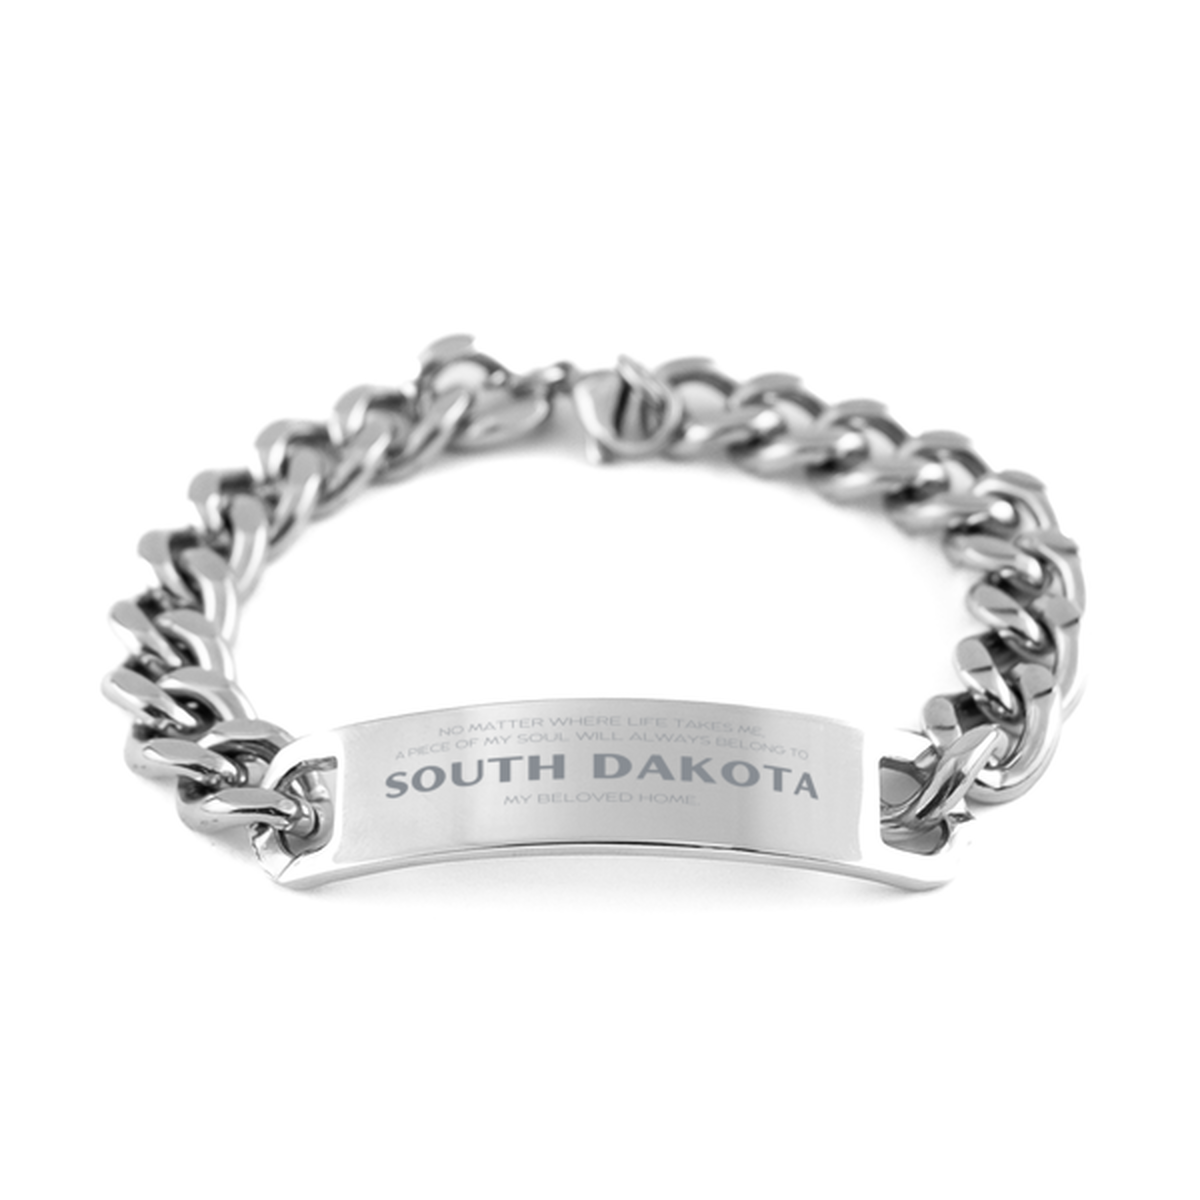 Love South Dakota State Gifts, My soul will always belong to South Dakota, Proud Cuban Chain Stainless Steel Bracelet, Birthday Unique Gifts For South Dakota Men, Women, Friends